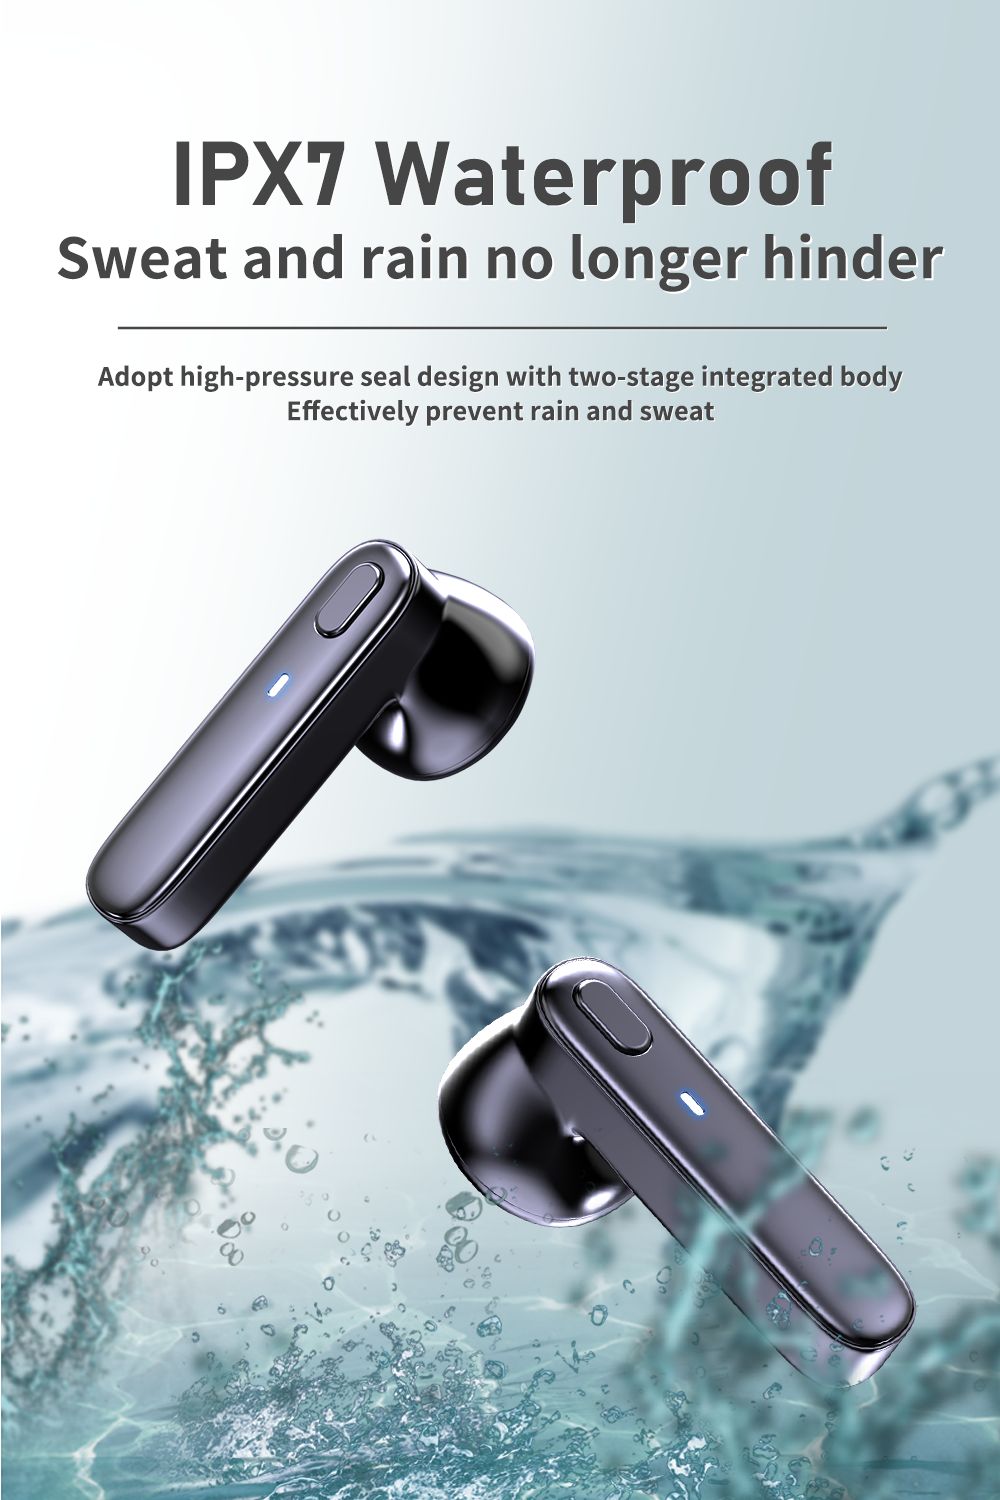 R20 TWS Earphones with Mic Bluetooth Deep Bass True Stereo IPX7 Waterproof - Black